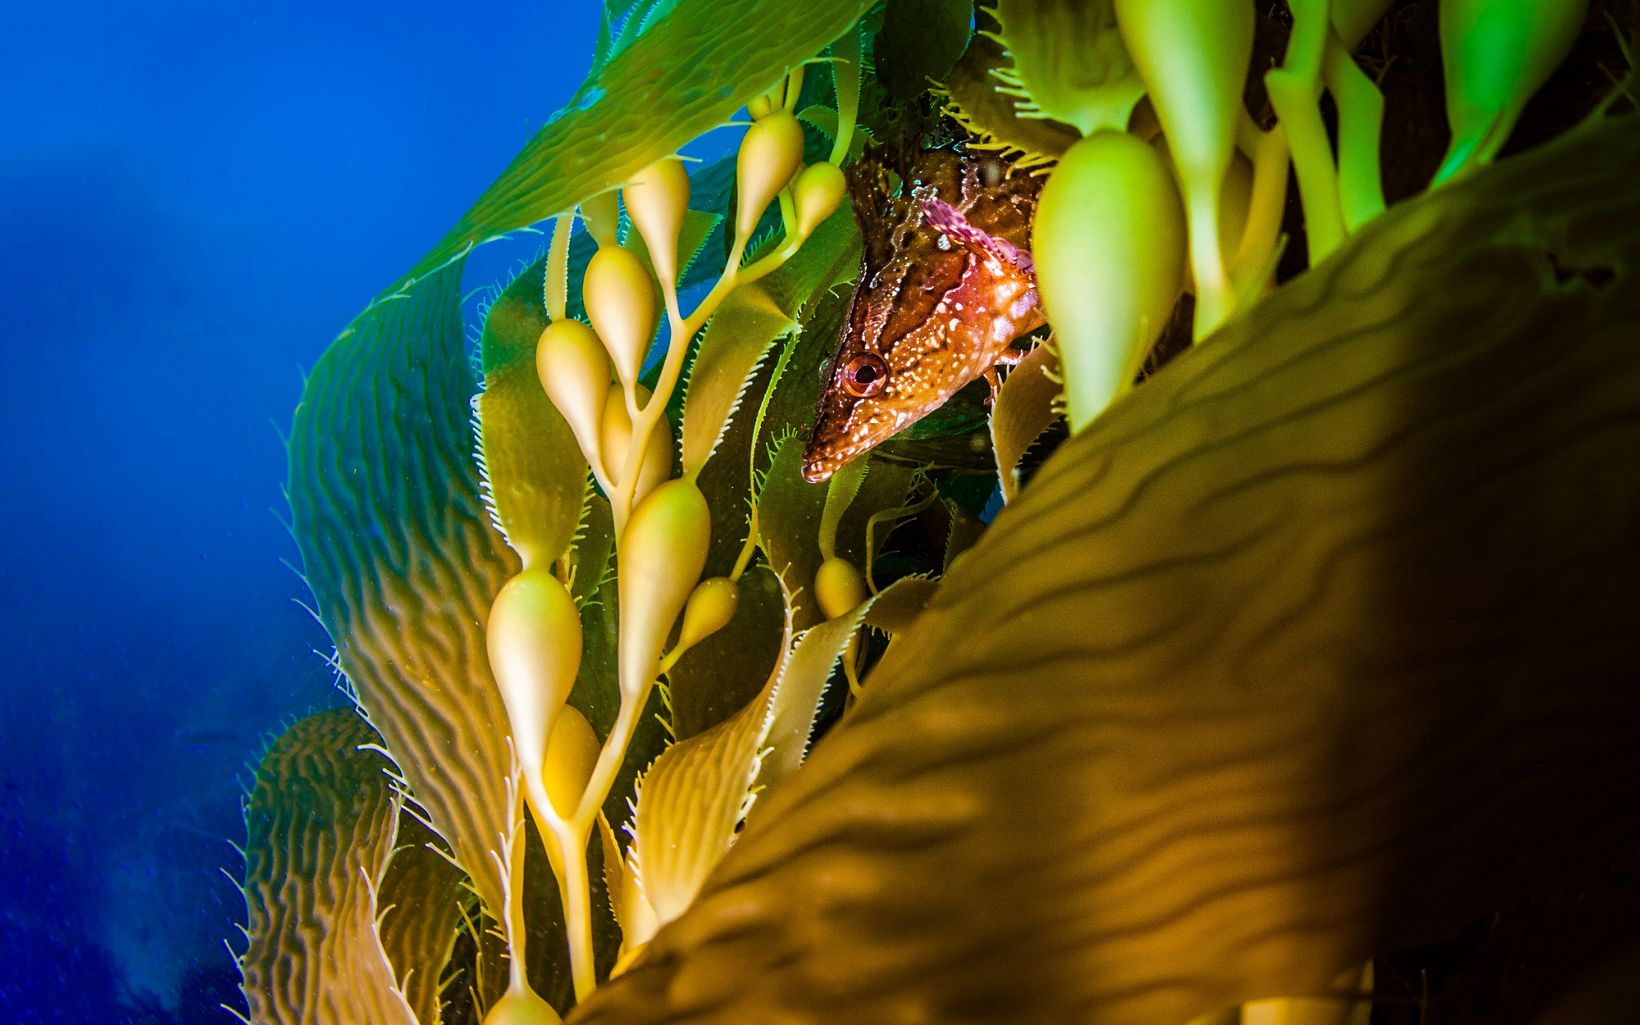 Closeup of a fish peeking out from between kelp fronds.